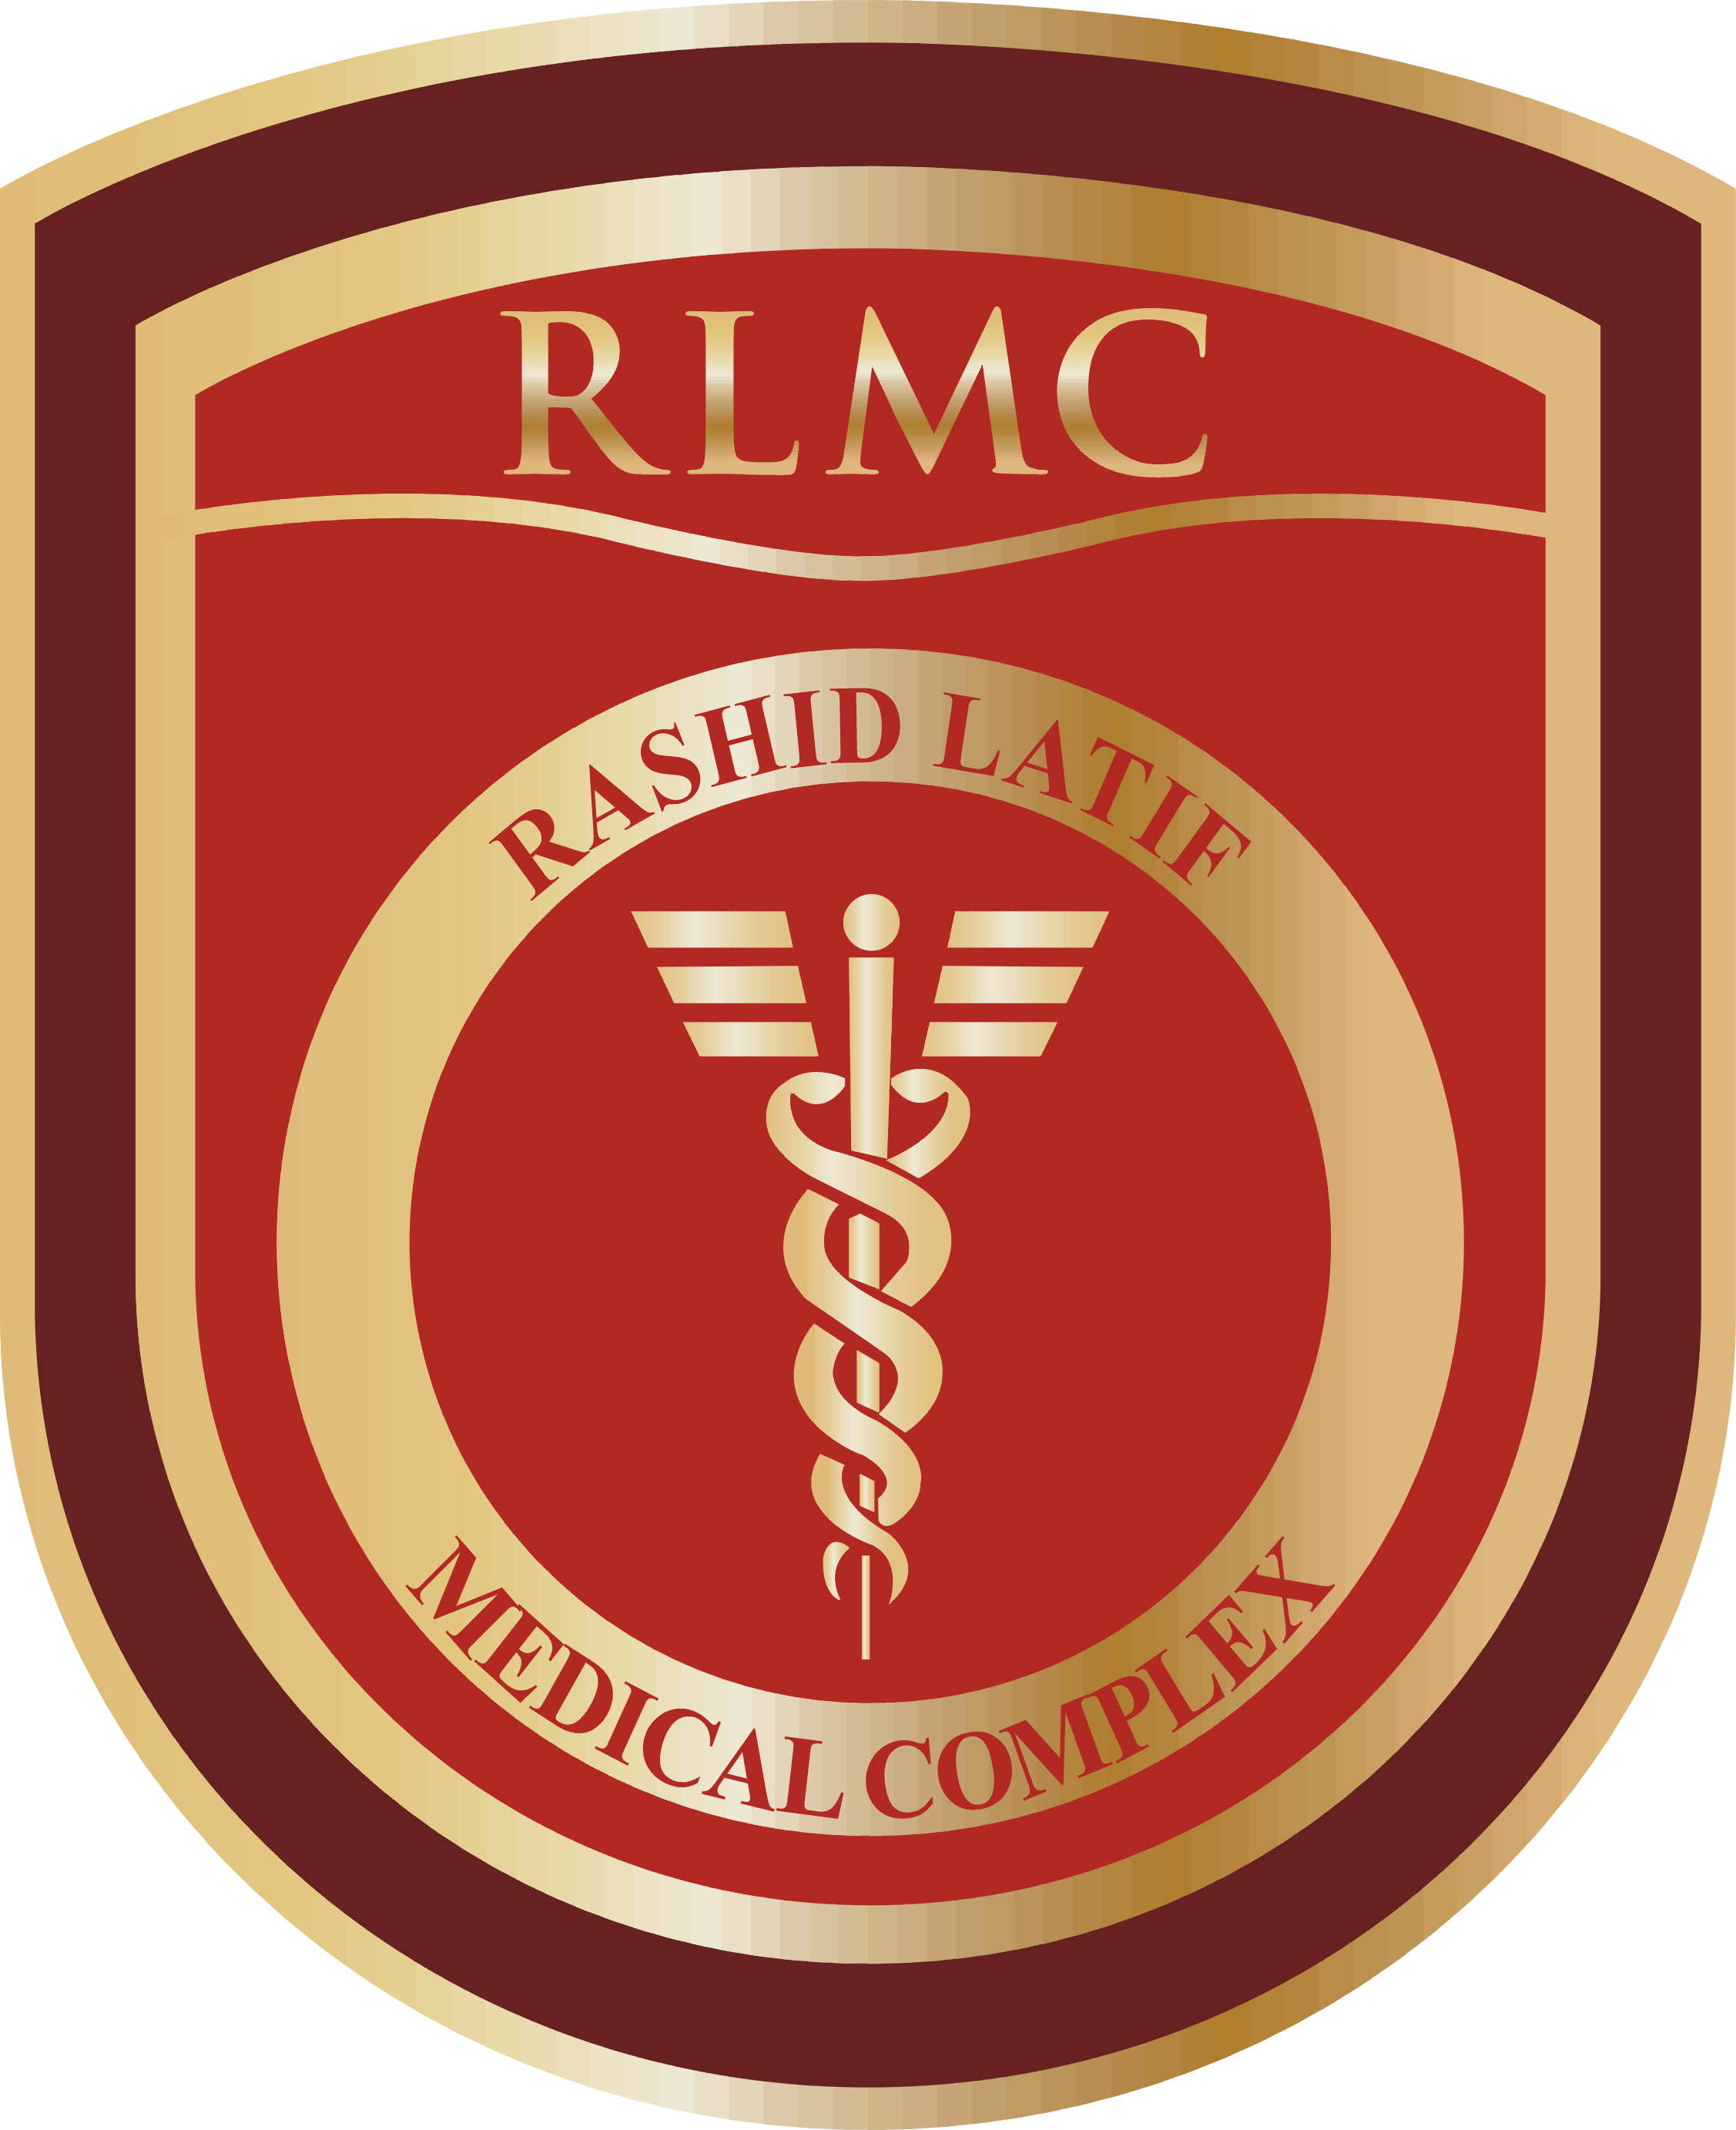 Rashid Latif Medical Complex